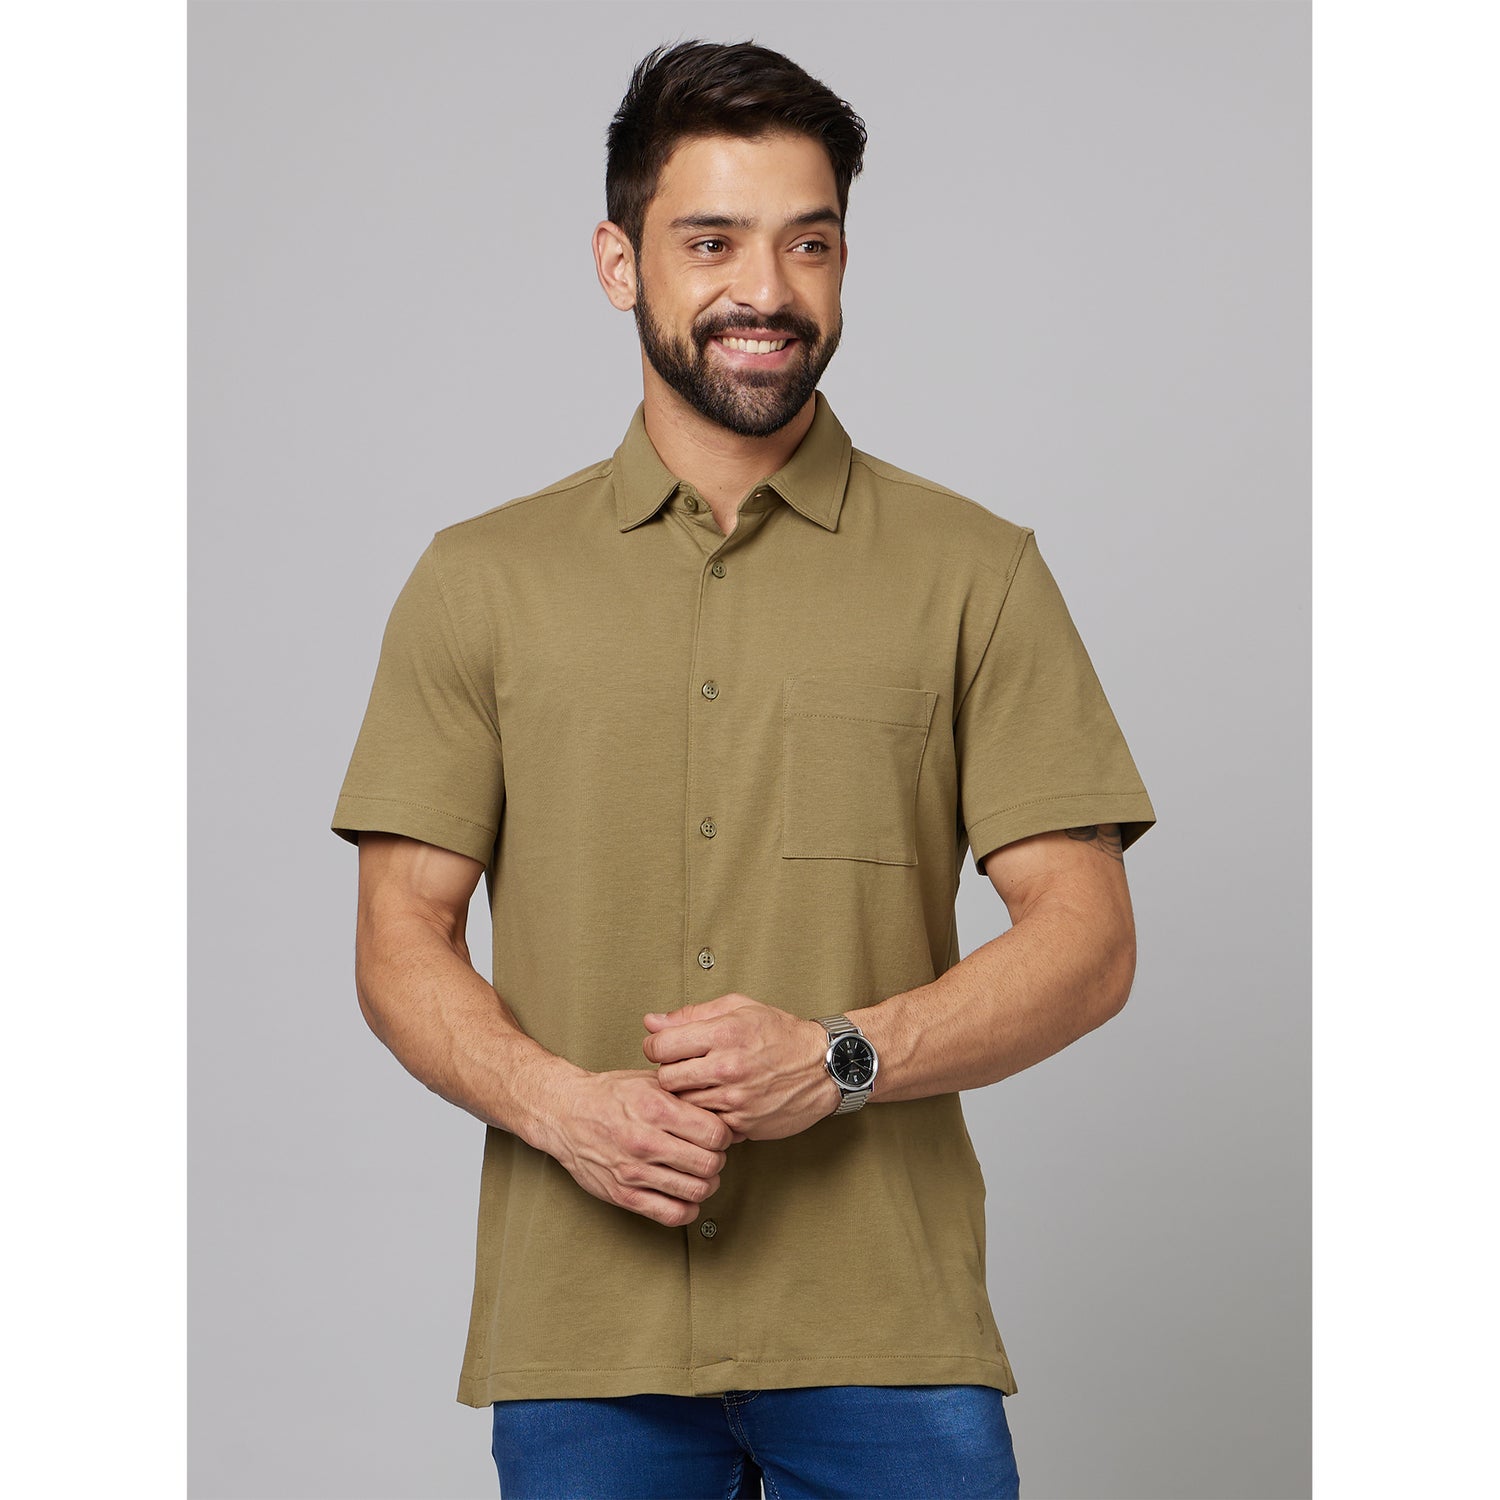 Khaki Spread Collar Classic Cotton Casual Shirt (DACOOL)